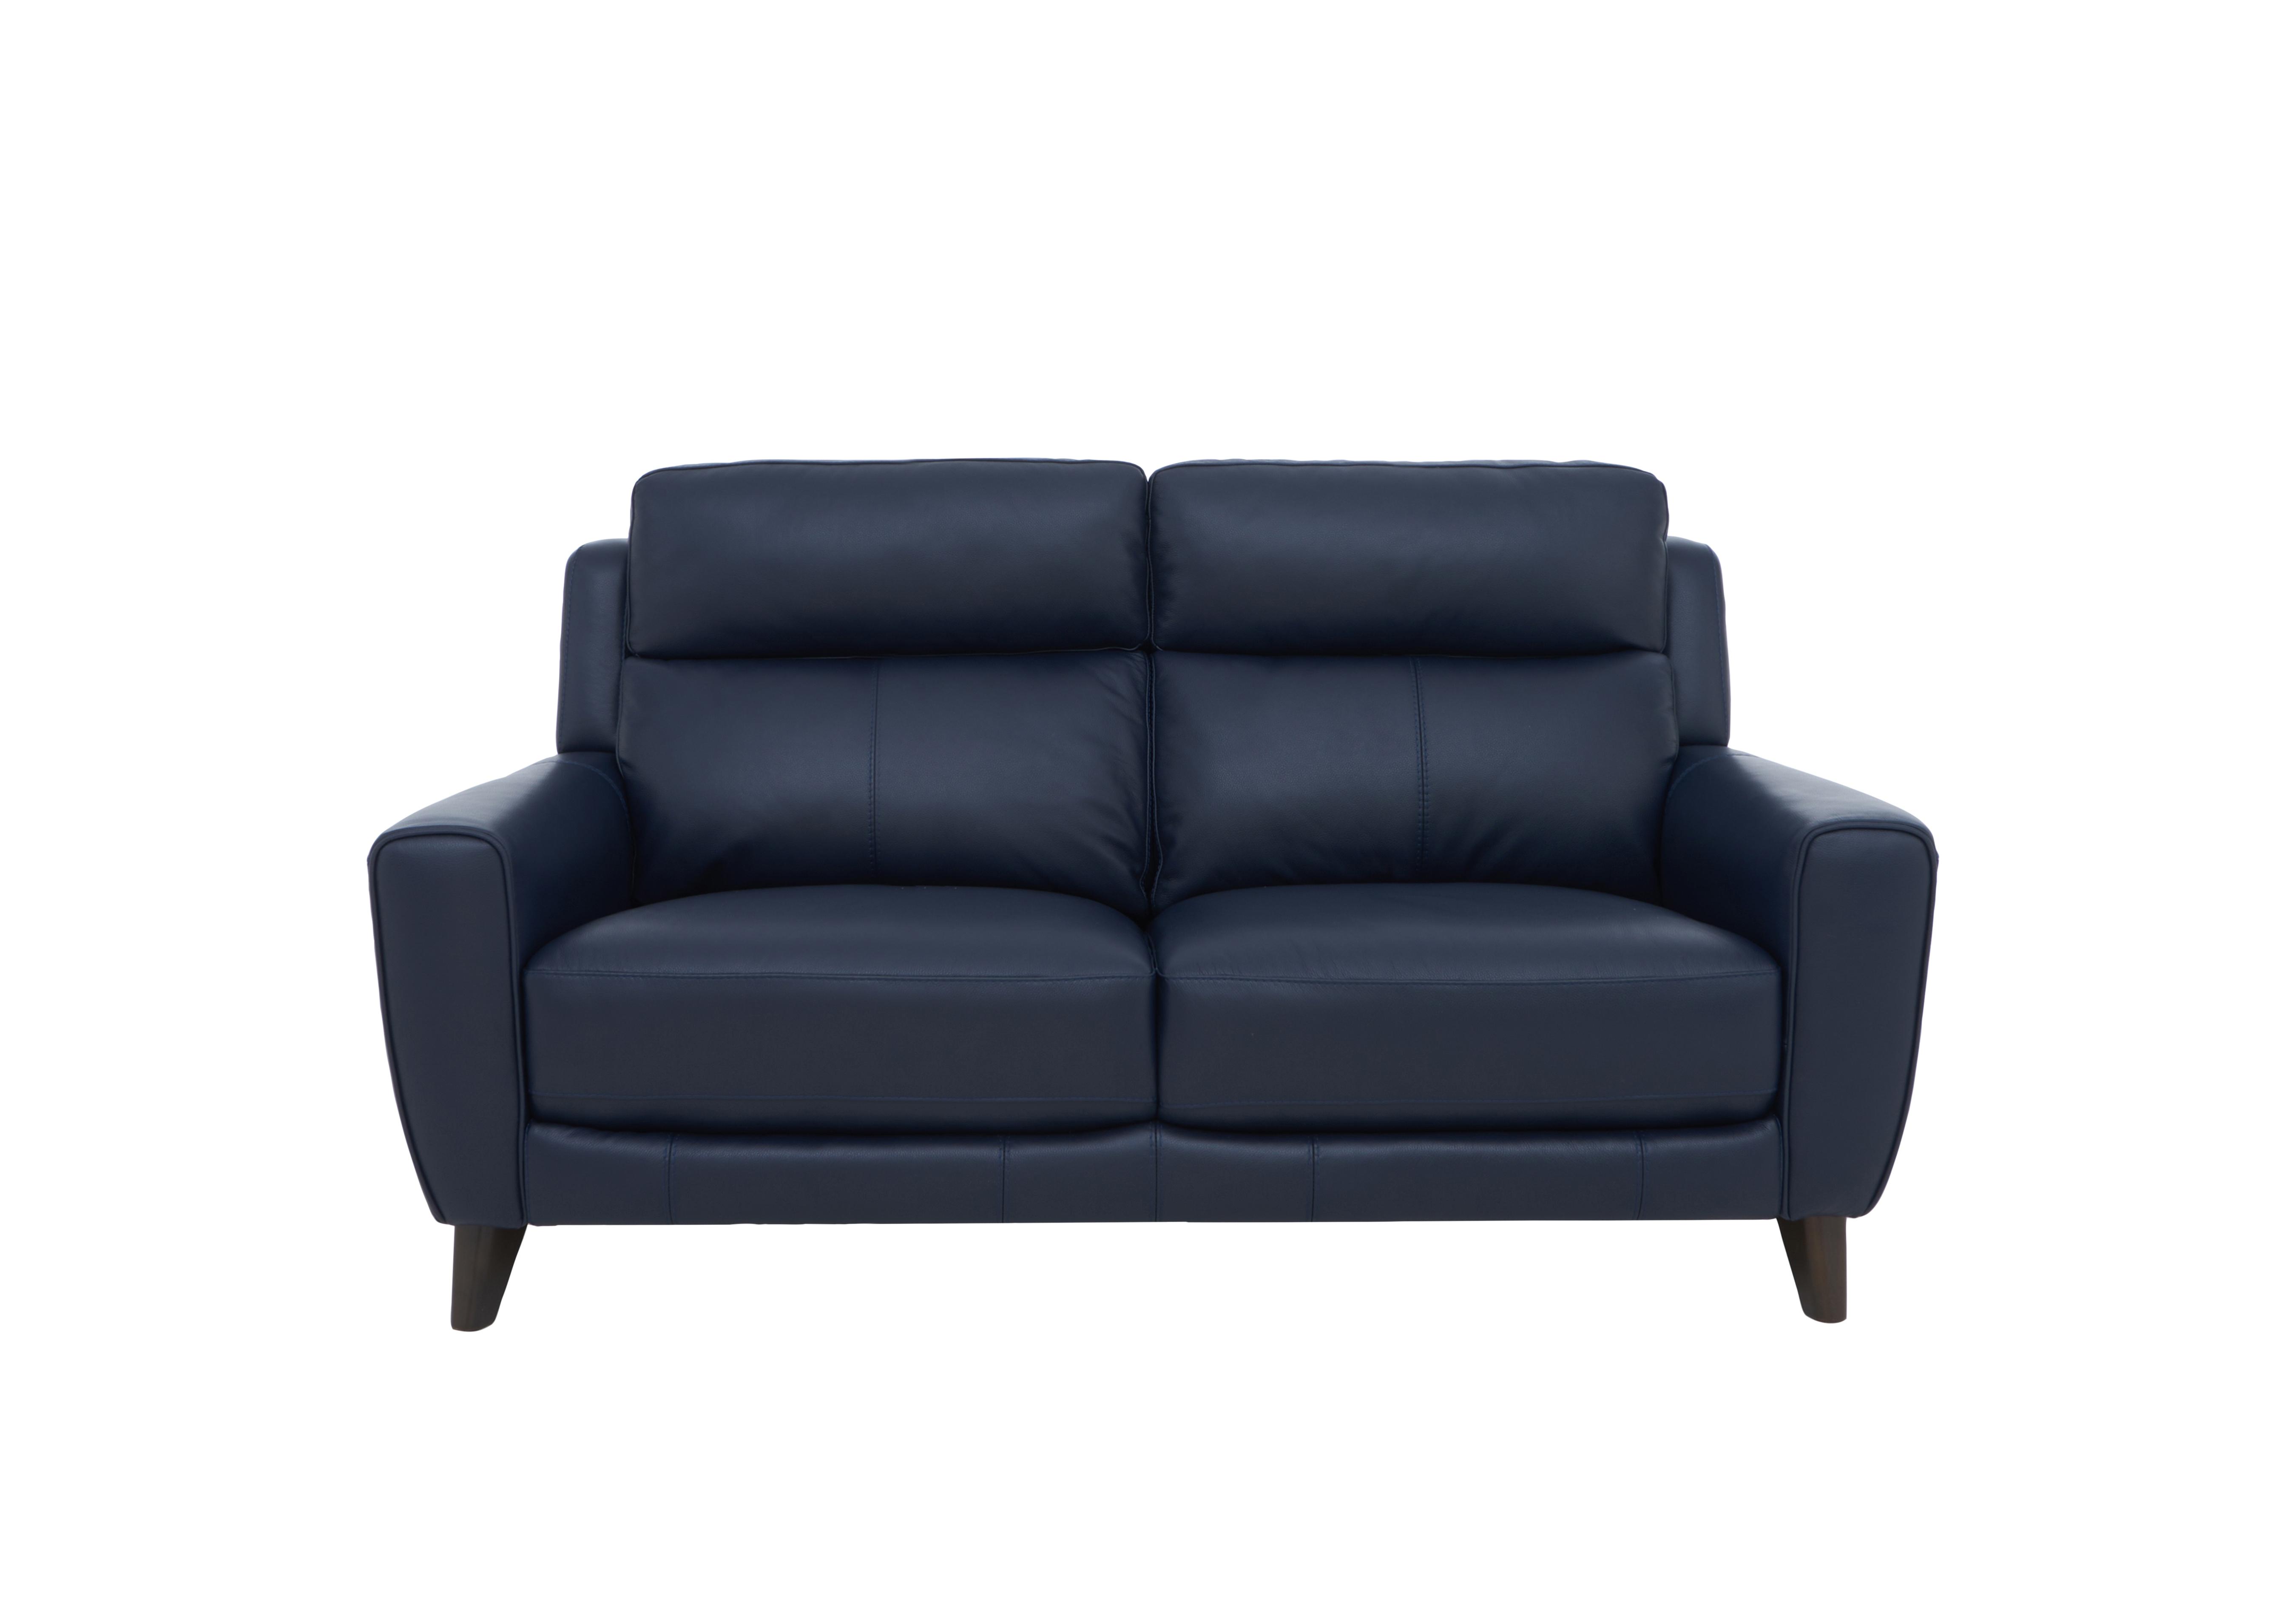 Zen 2 Seater Leather Sofa in Bx-036c Navy on Furniture Village